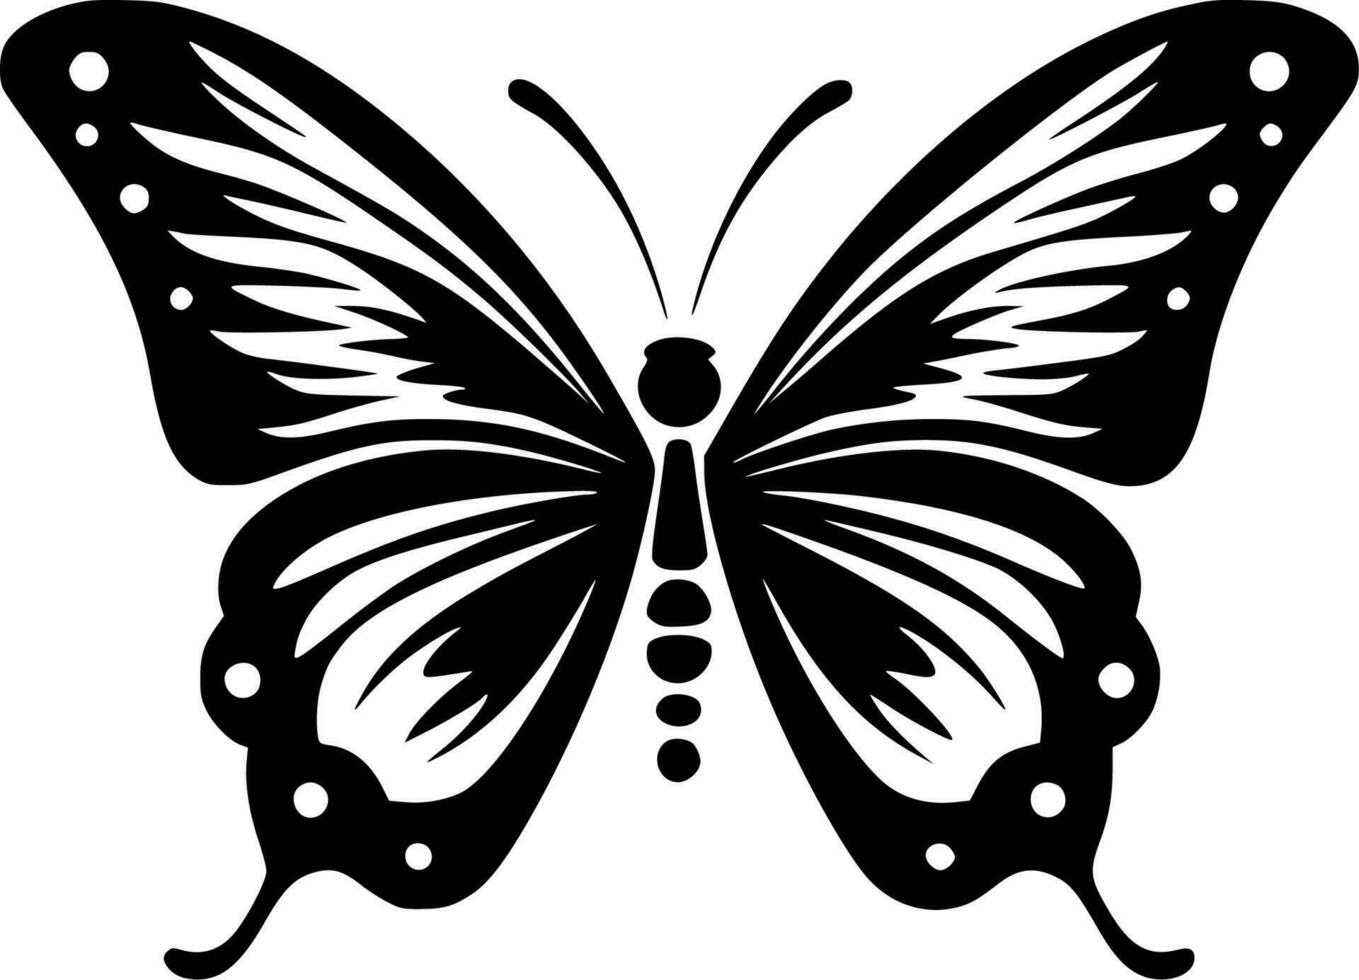 borboleta, minimalista e simples silhueta - vetor ilustração